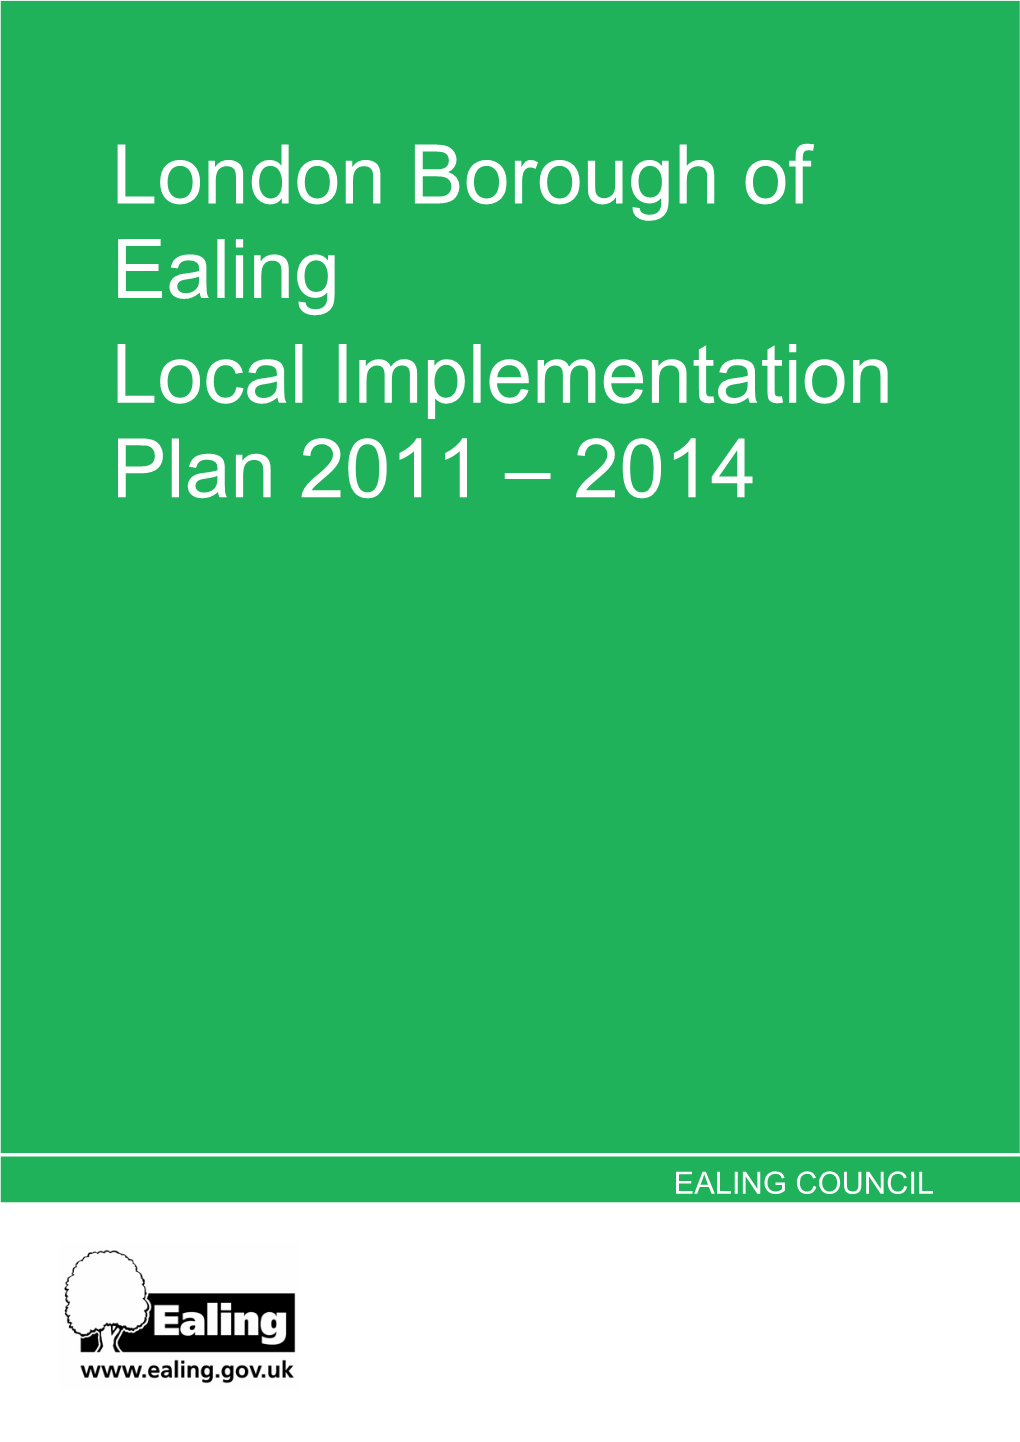 Local Improvement Plan